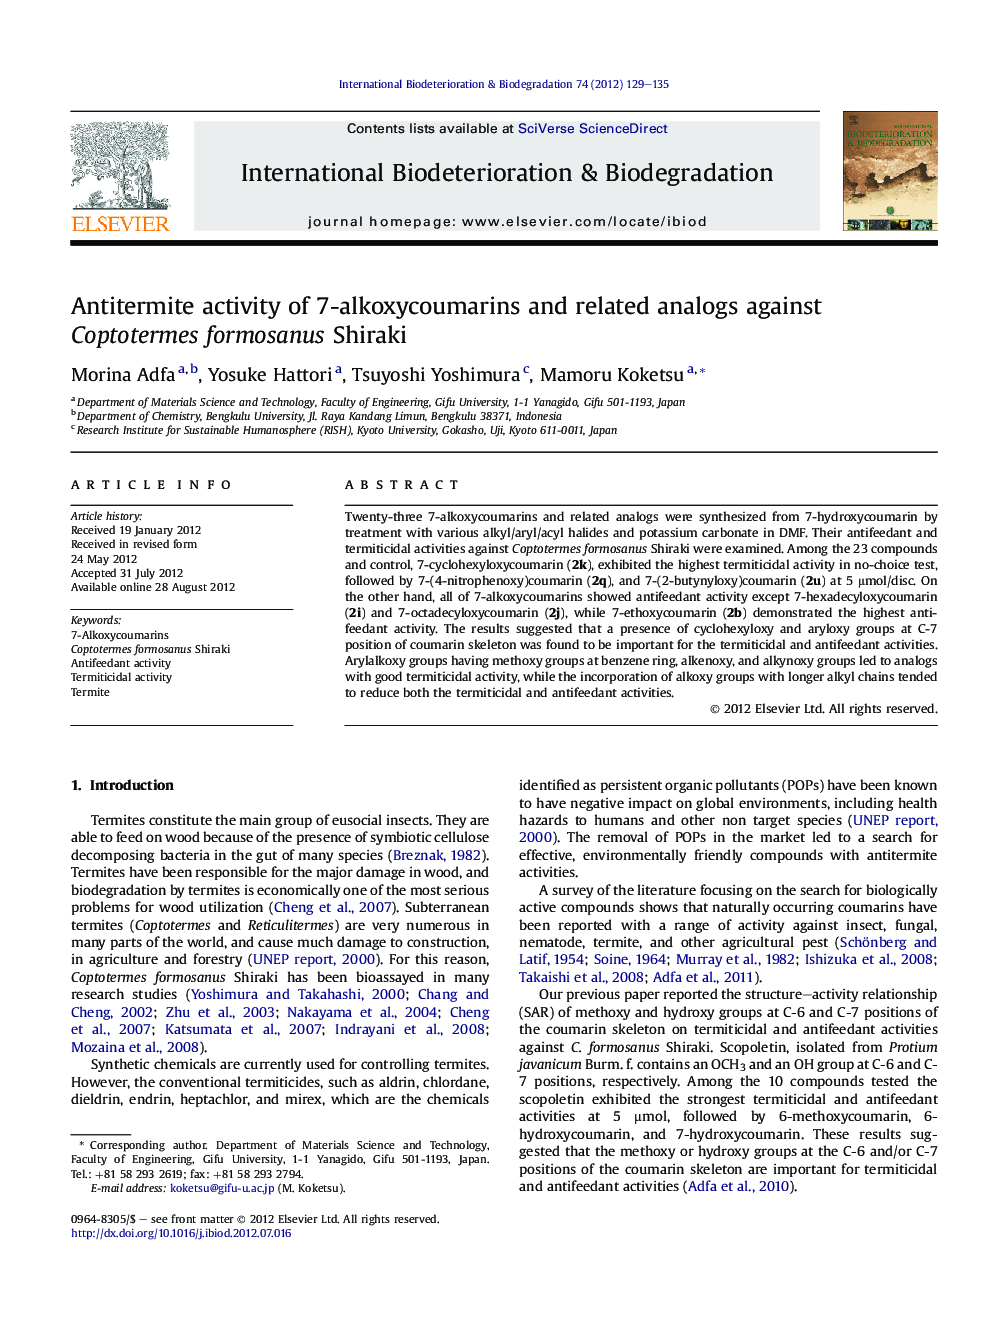 Antitermite activity of 7-alkoxycoumarins and related analogs against Coptotermes formosanus Shiraki